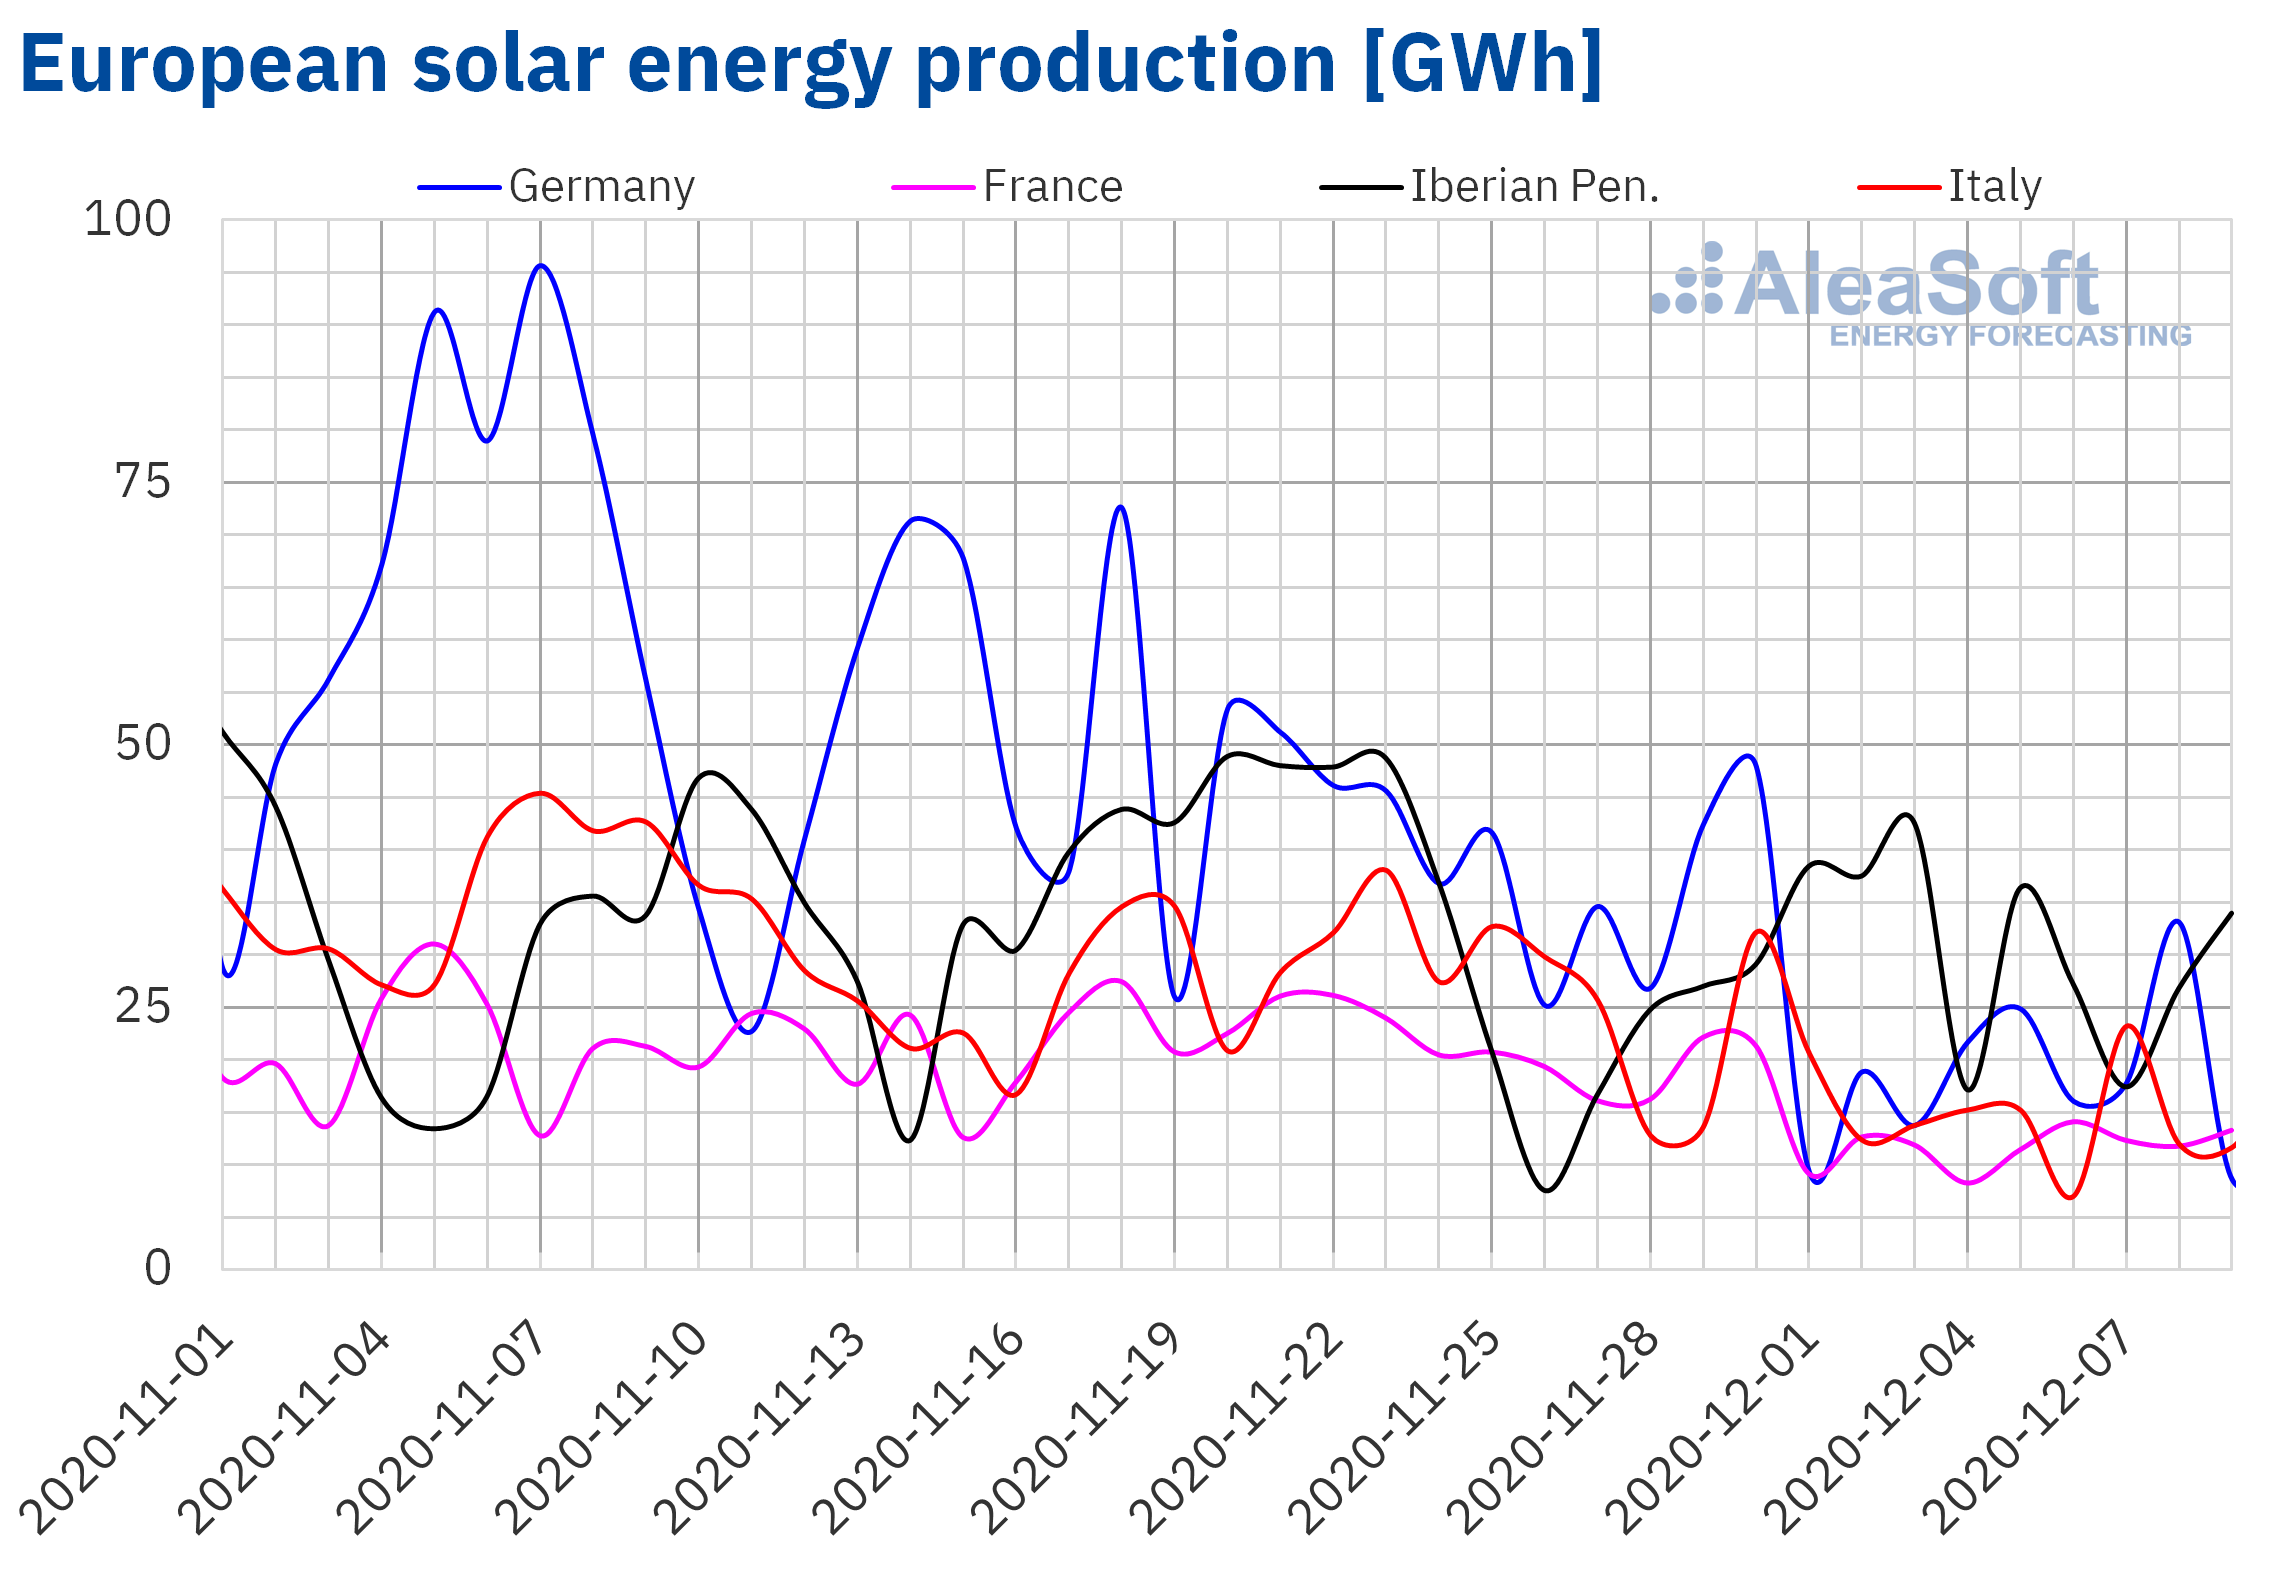 AleaSoft - Solar photovoltaic and thermosolar energy production of Europe